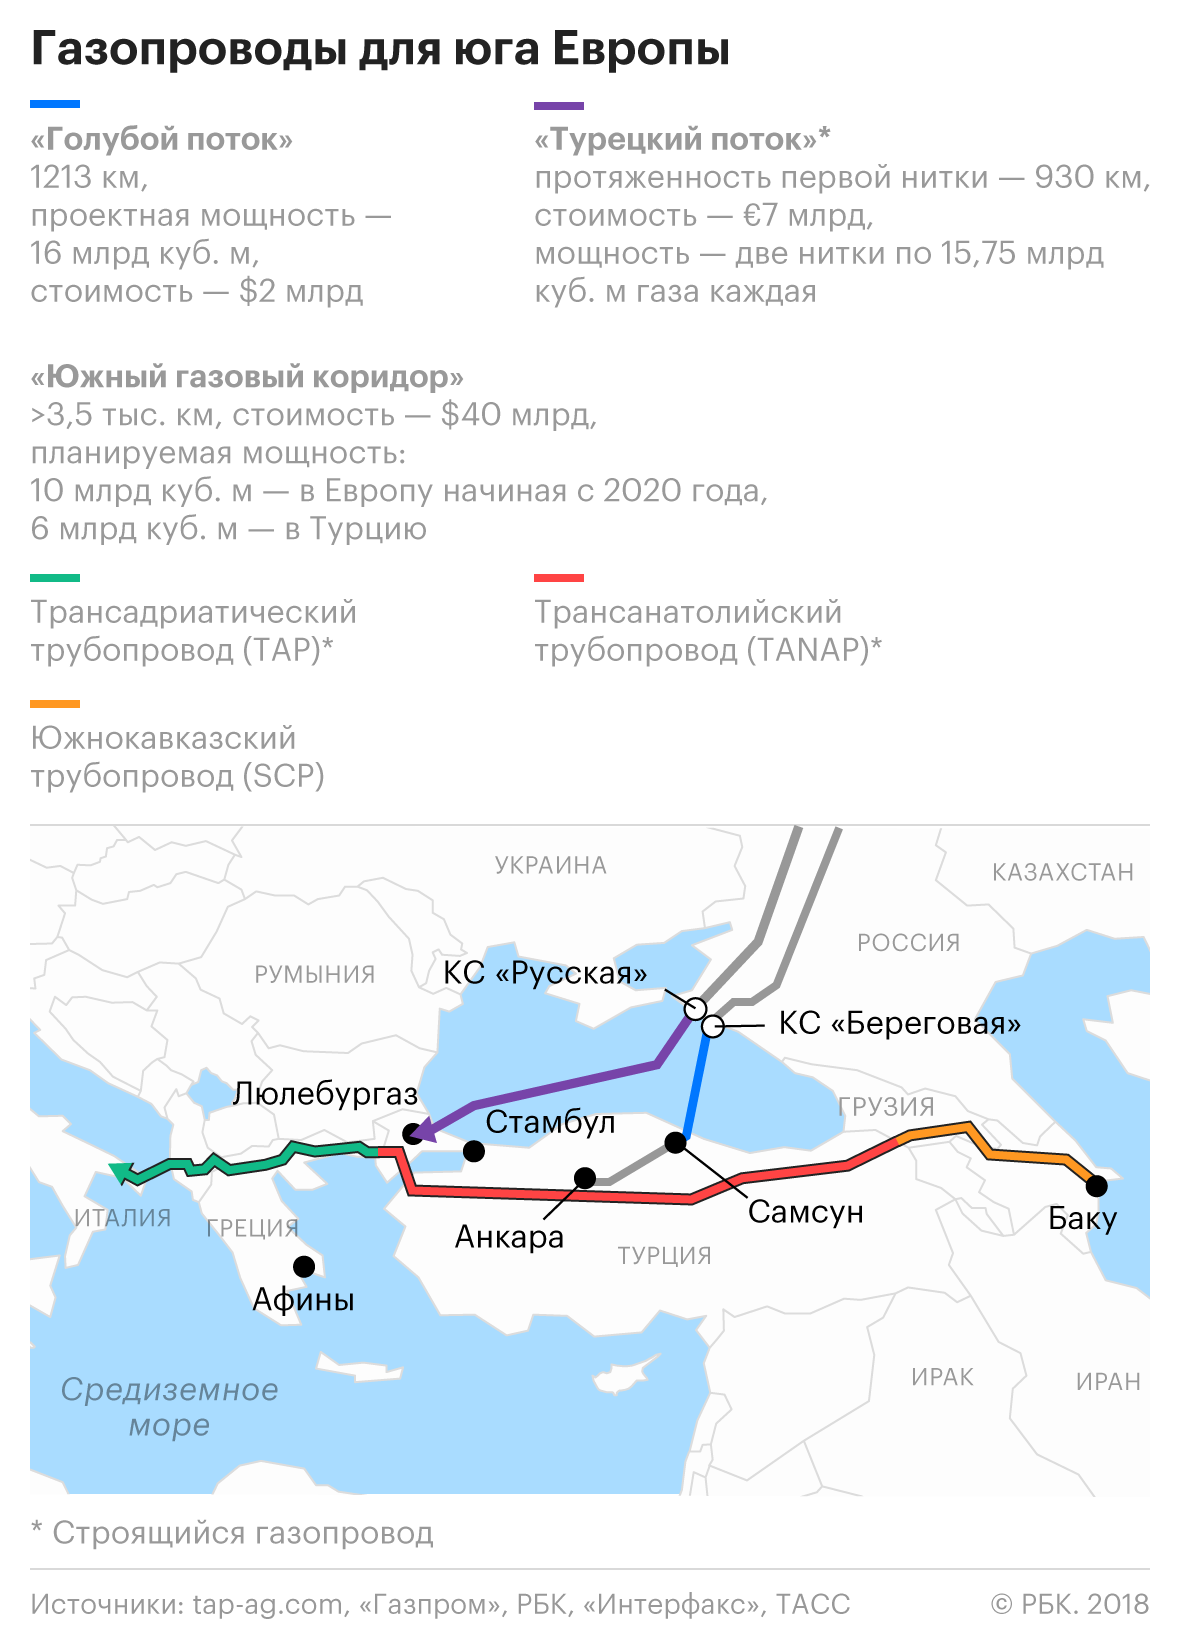 Газопровод турецкий поток на карте Европы